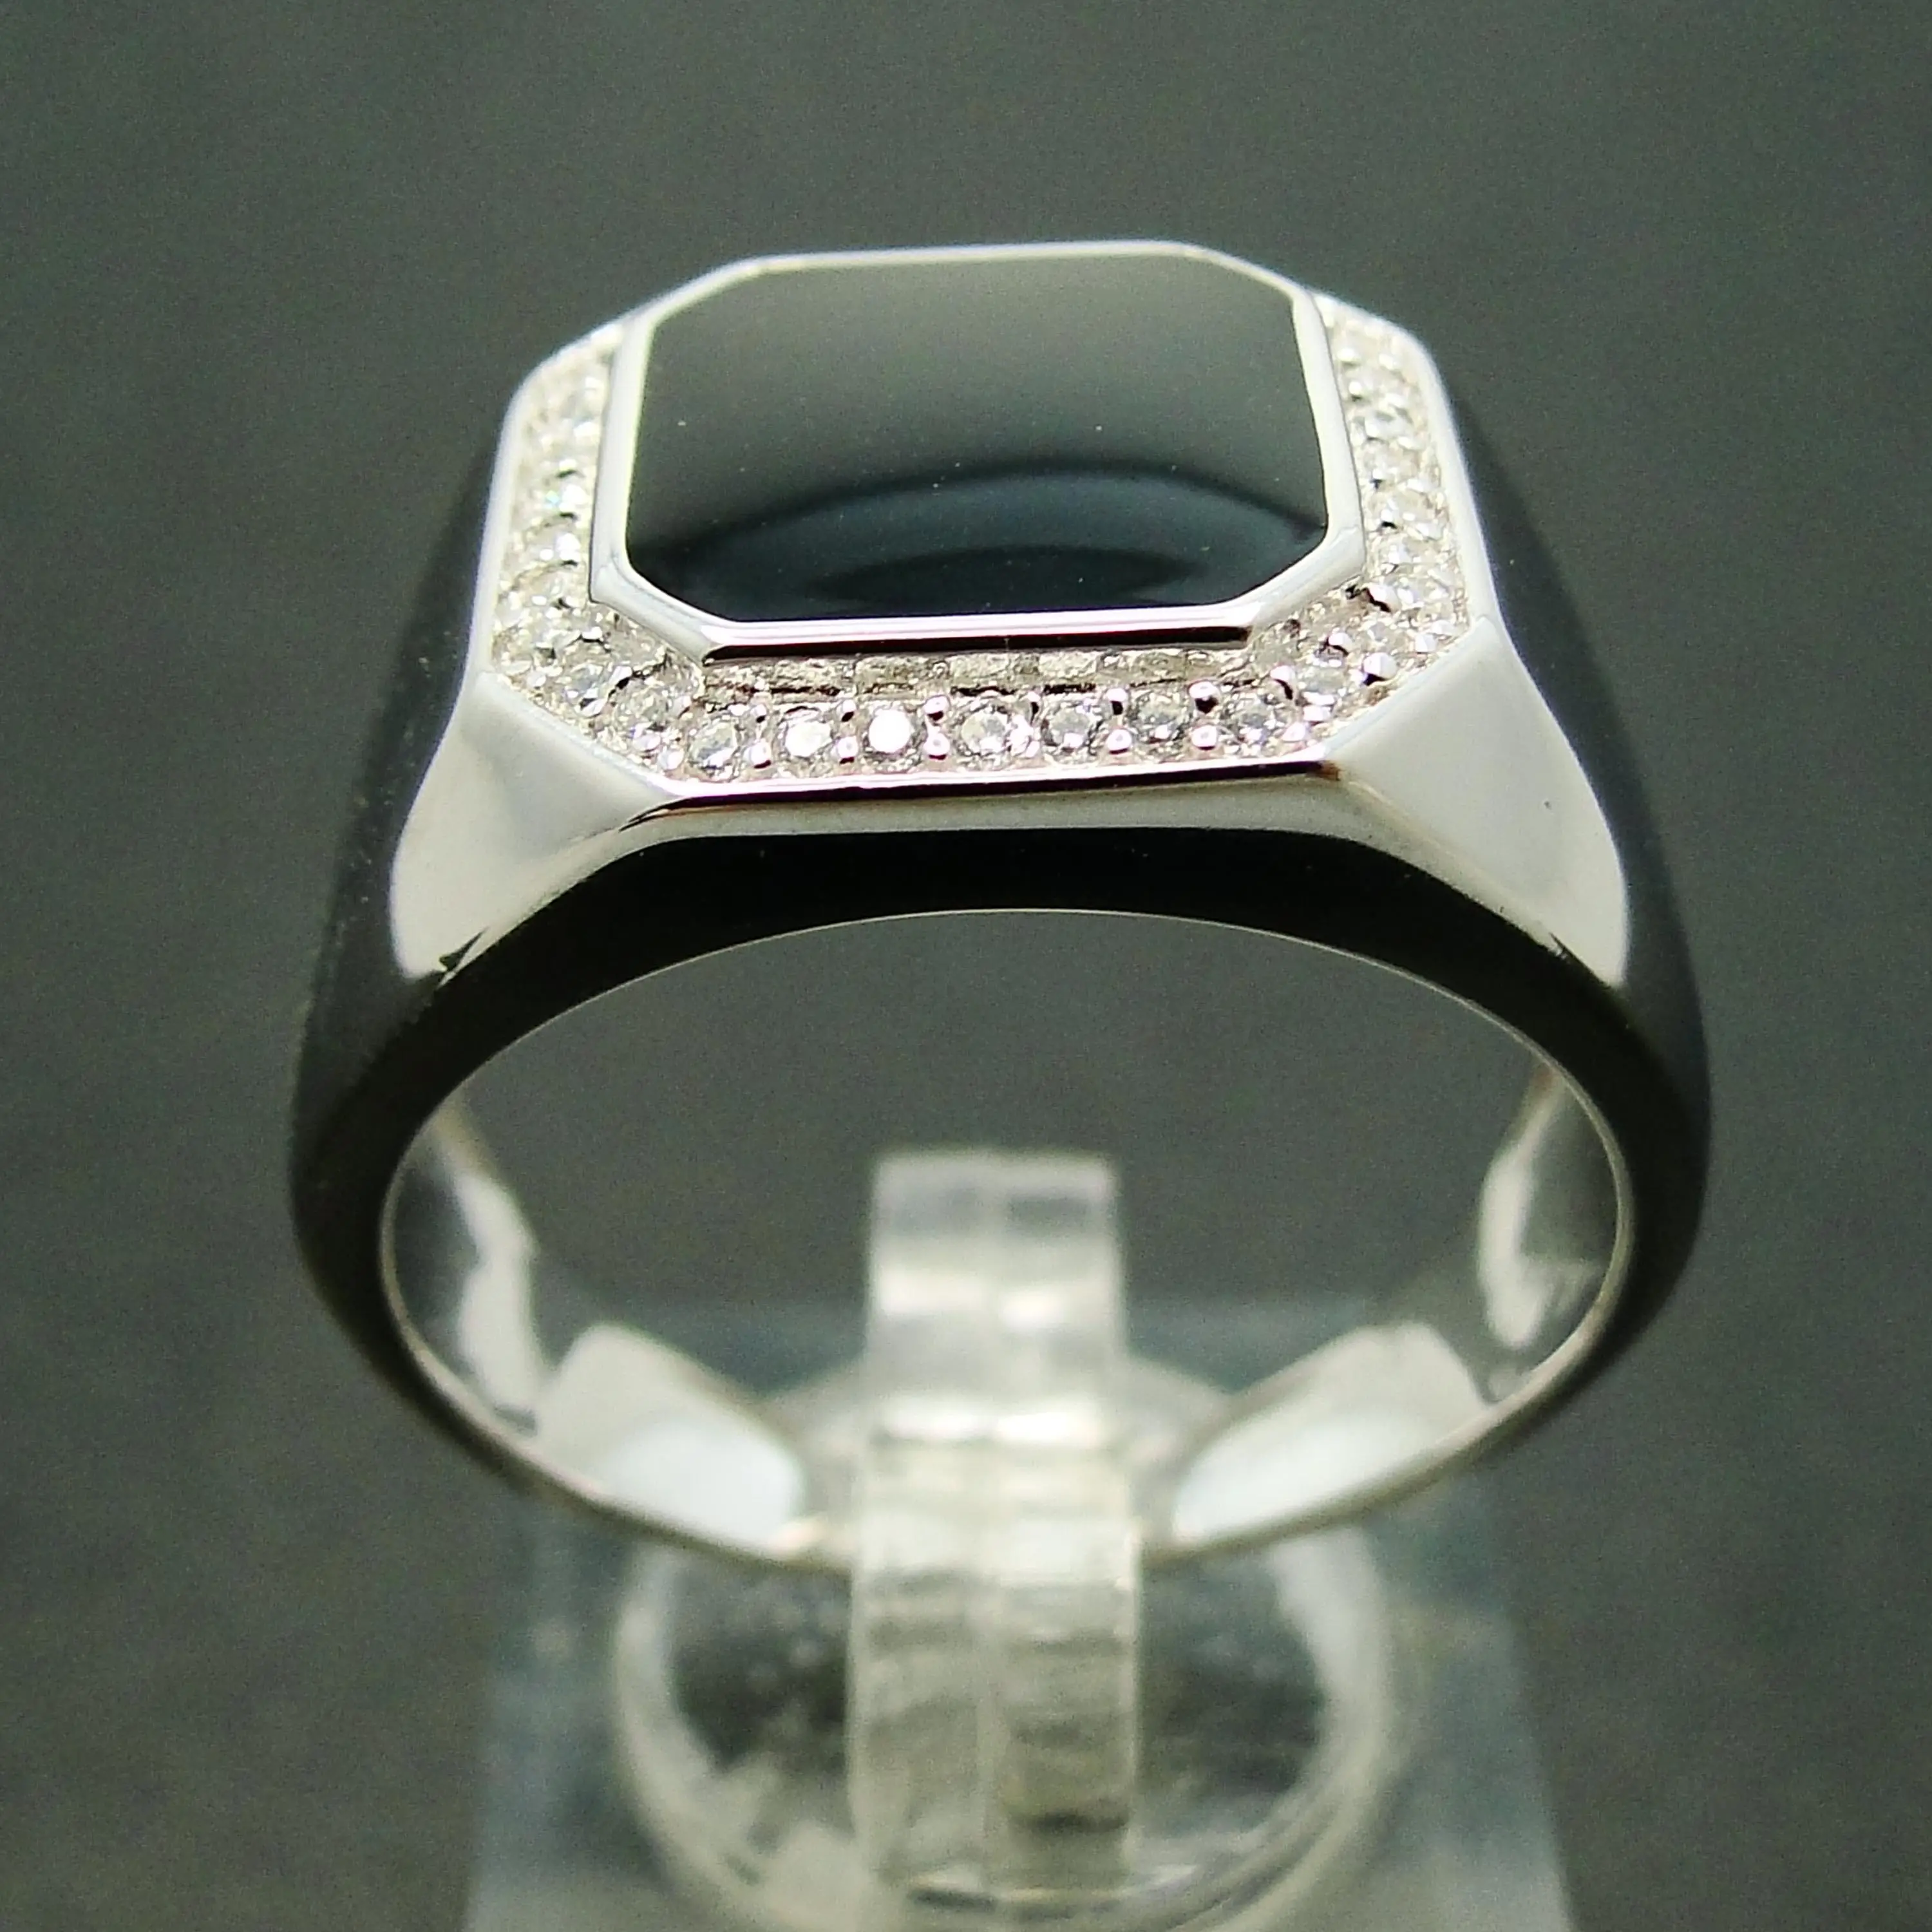 Hohe Qualität Klassische Männer Ringe 925 Sterling Silber Mode Schmuck Männer Engagement Schwarz Emaille Ring